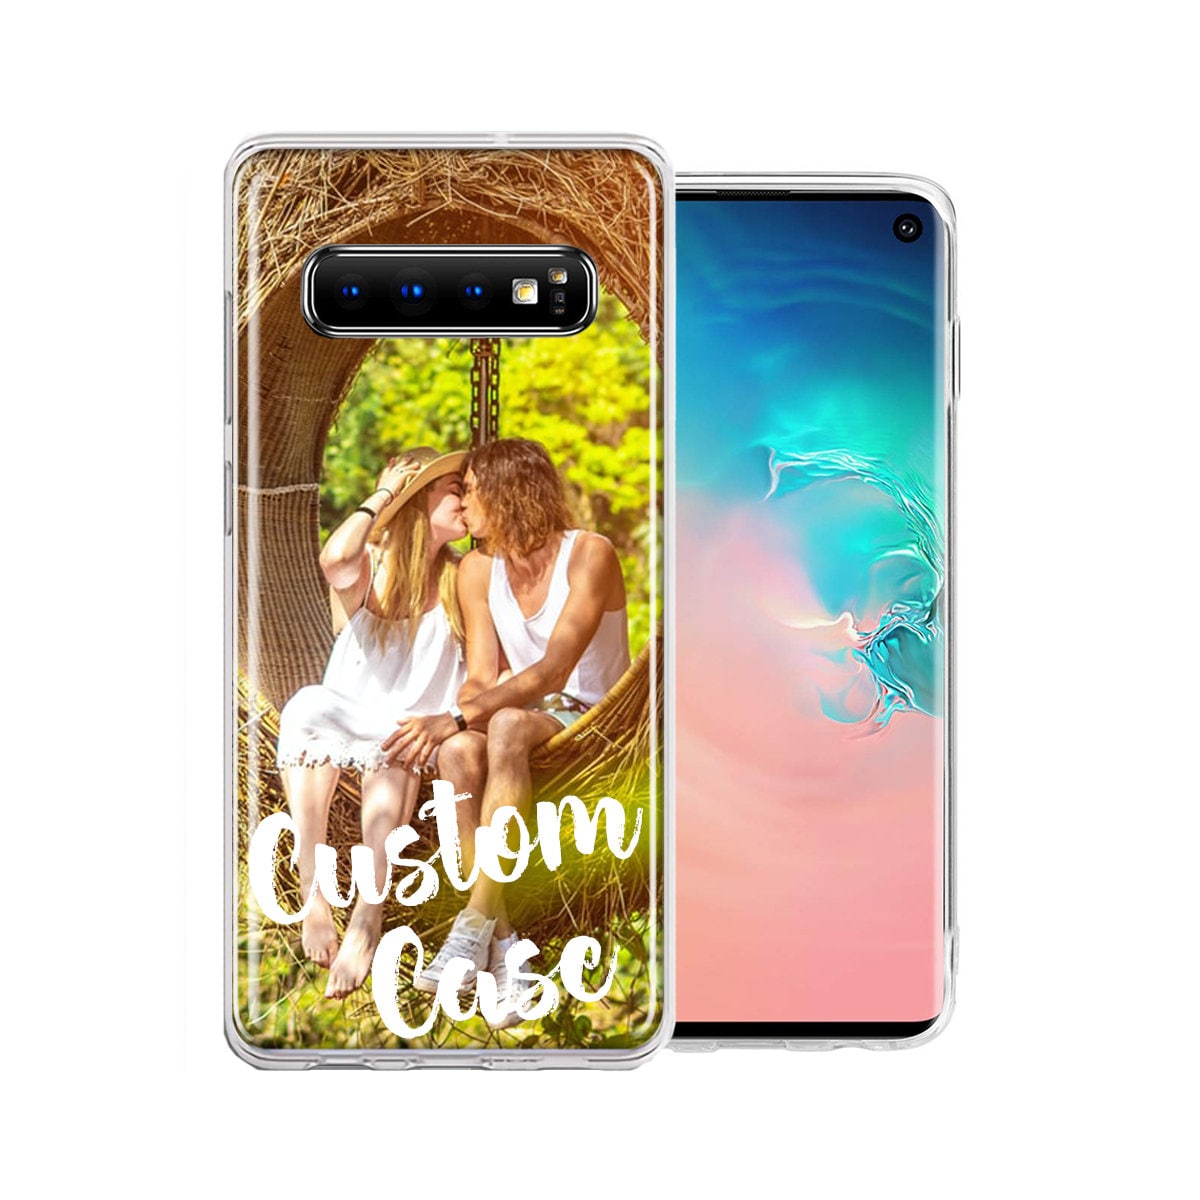 Galaxy S10 Plus Case - Etsy